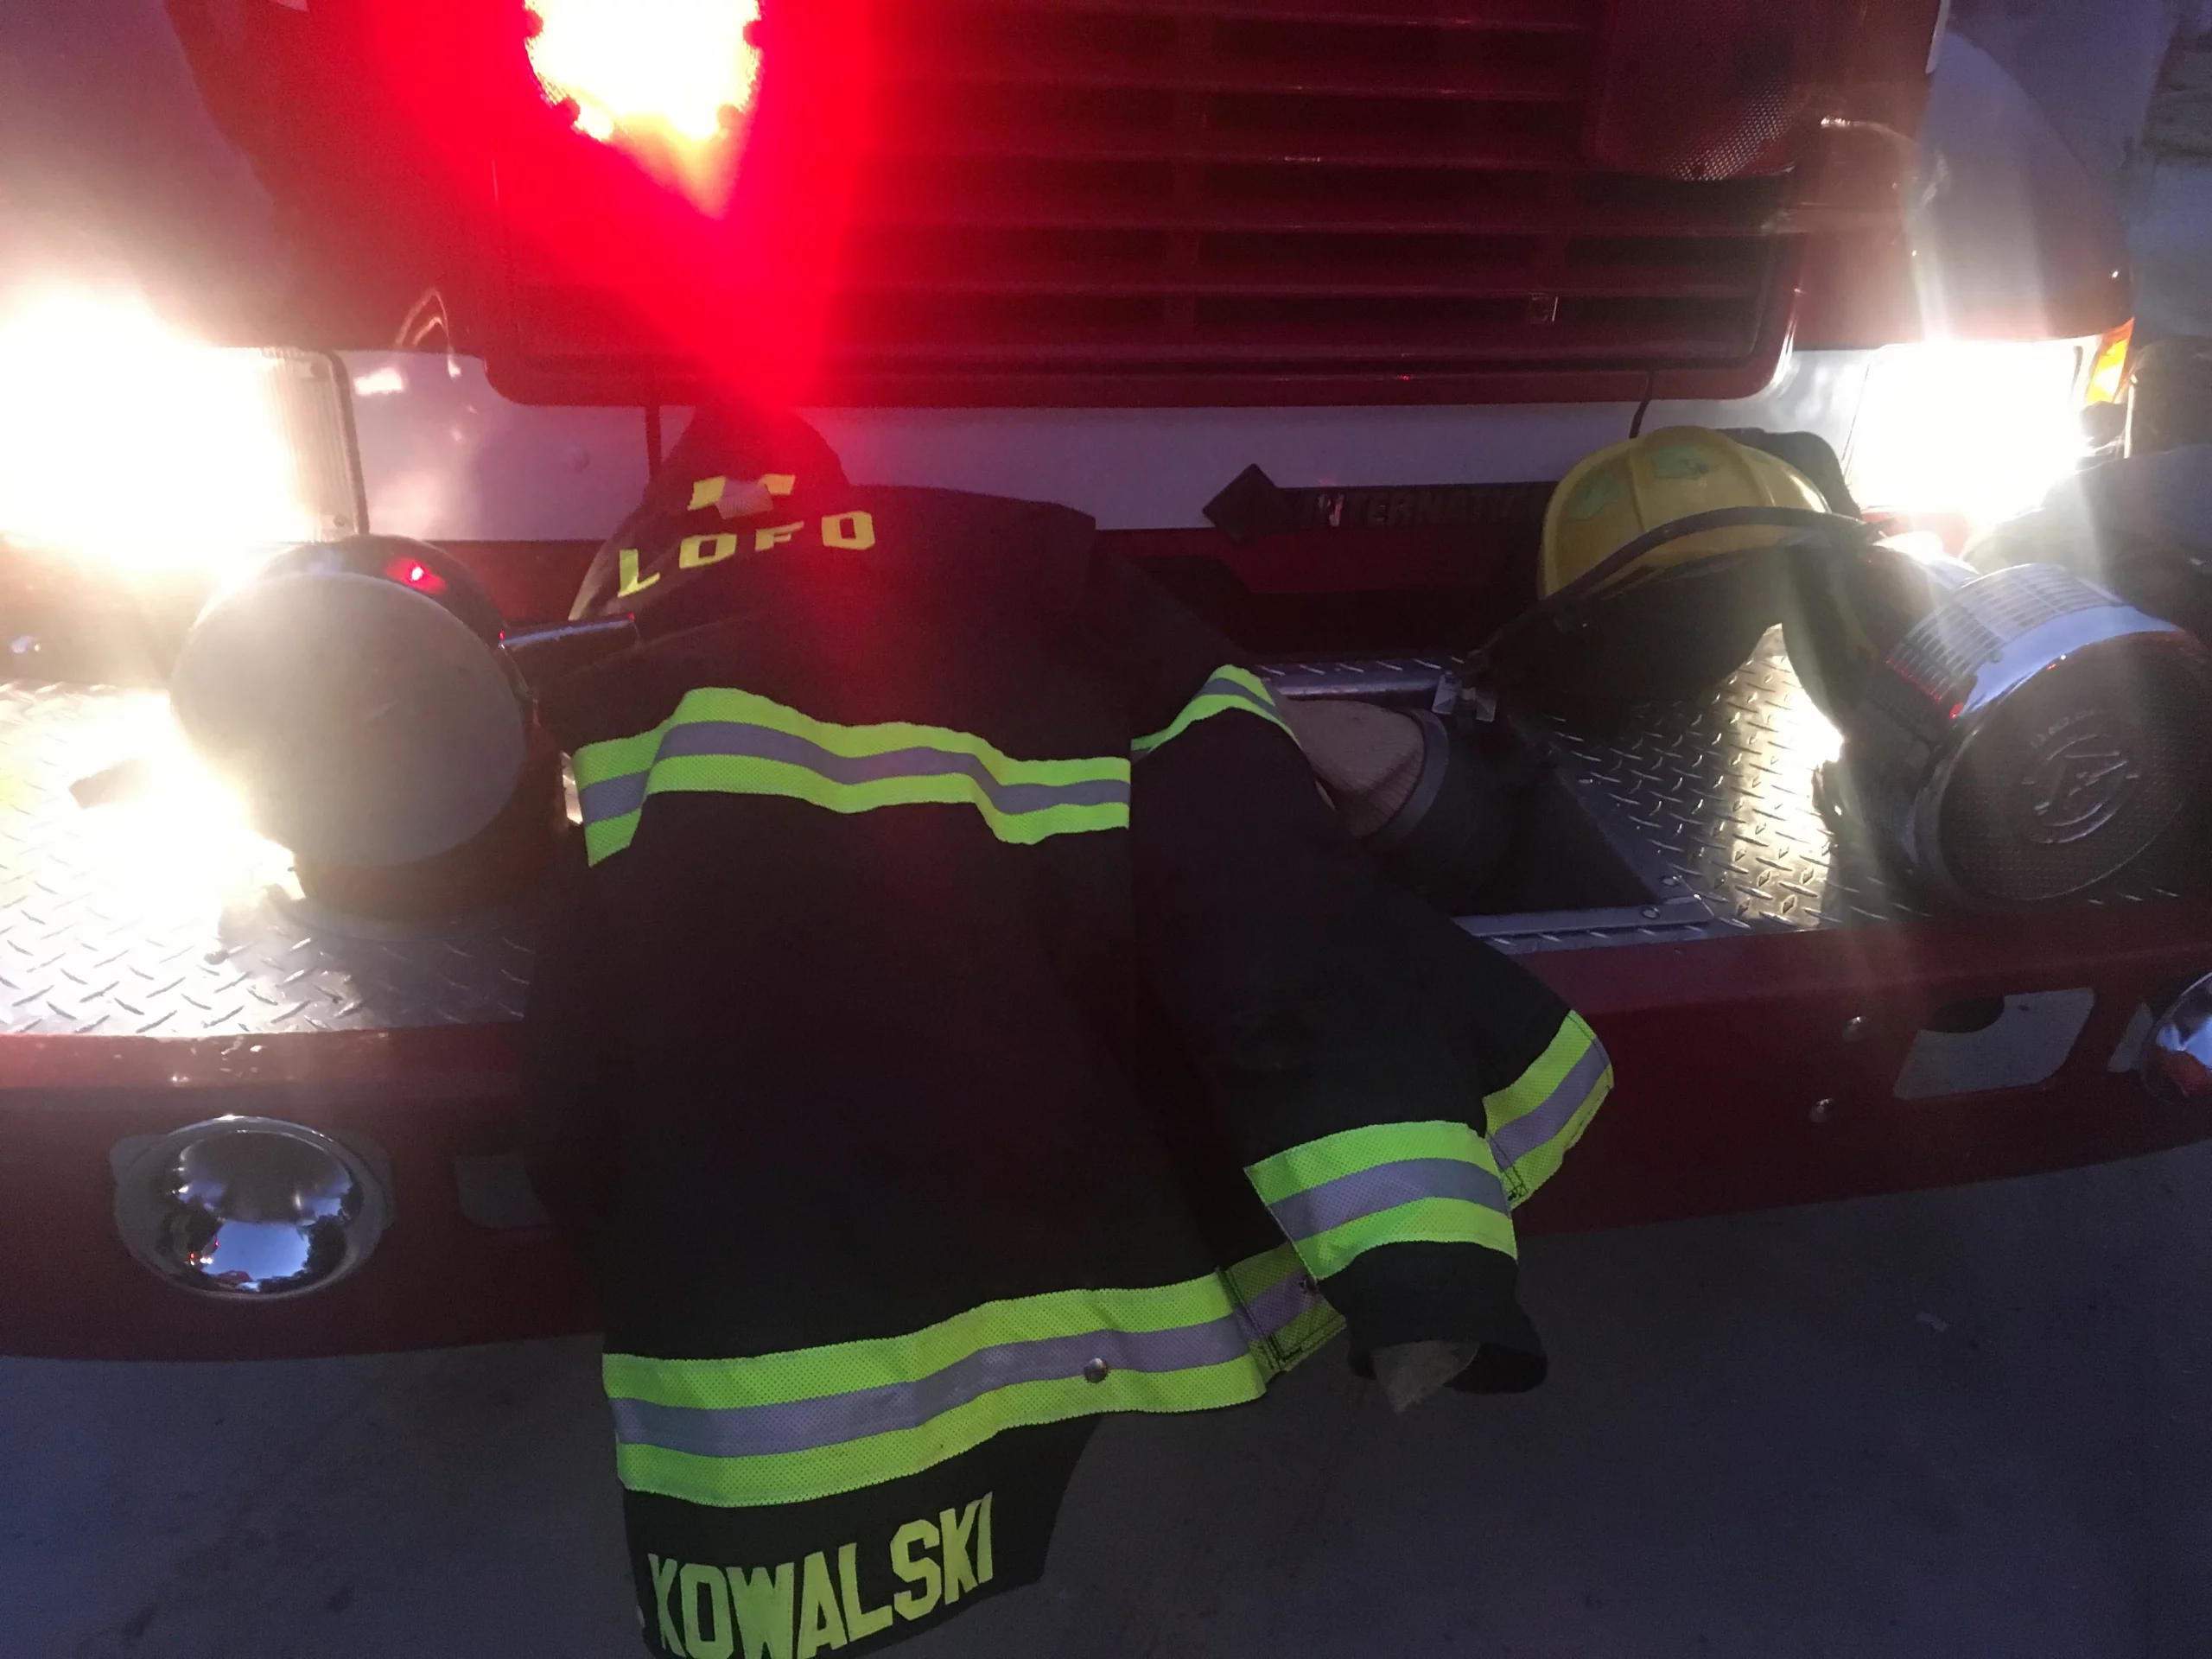 John R Kowalski's firefighter jacket rests on the fire truck.